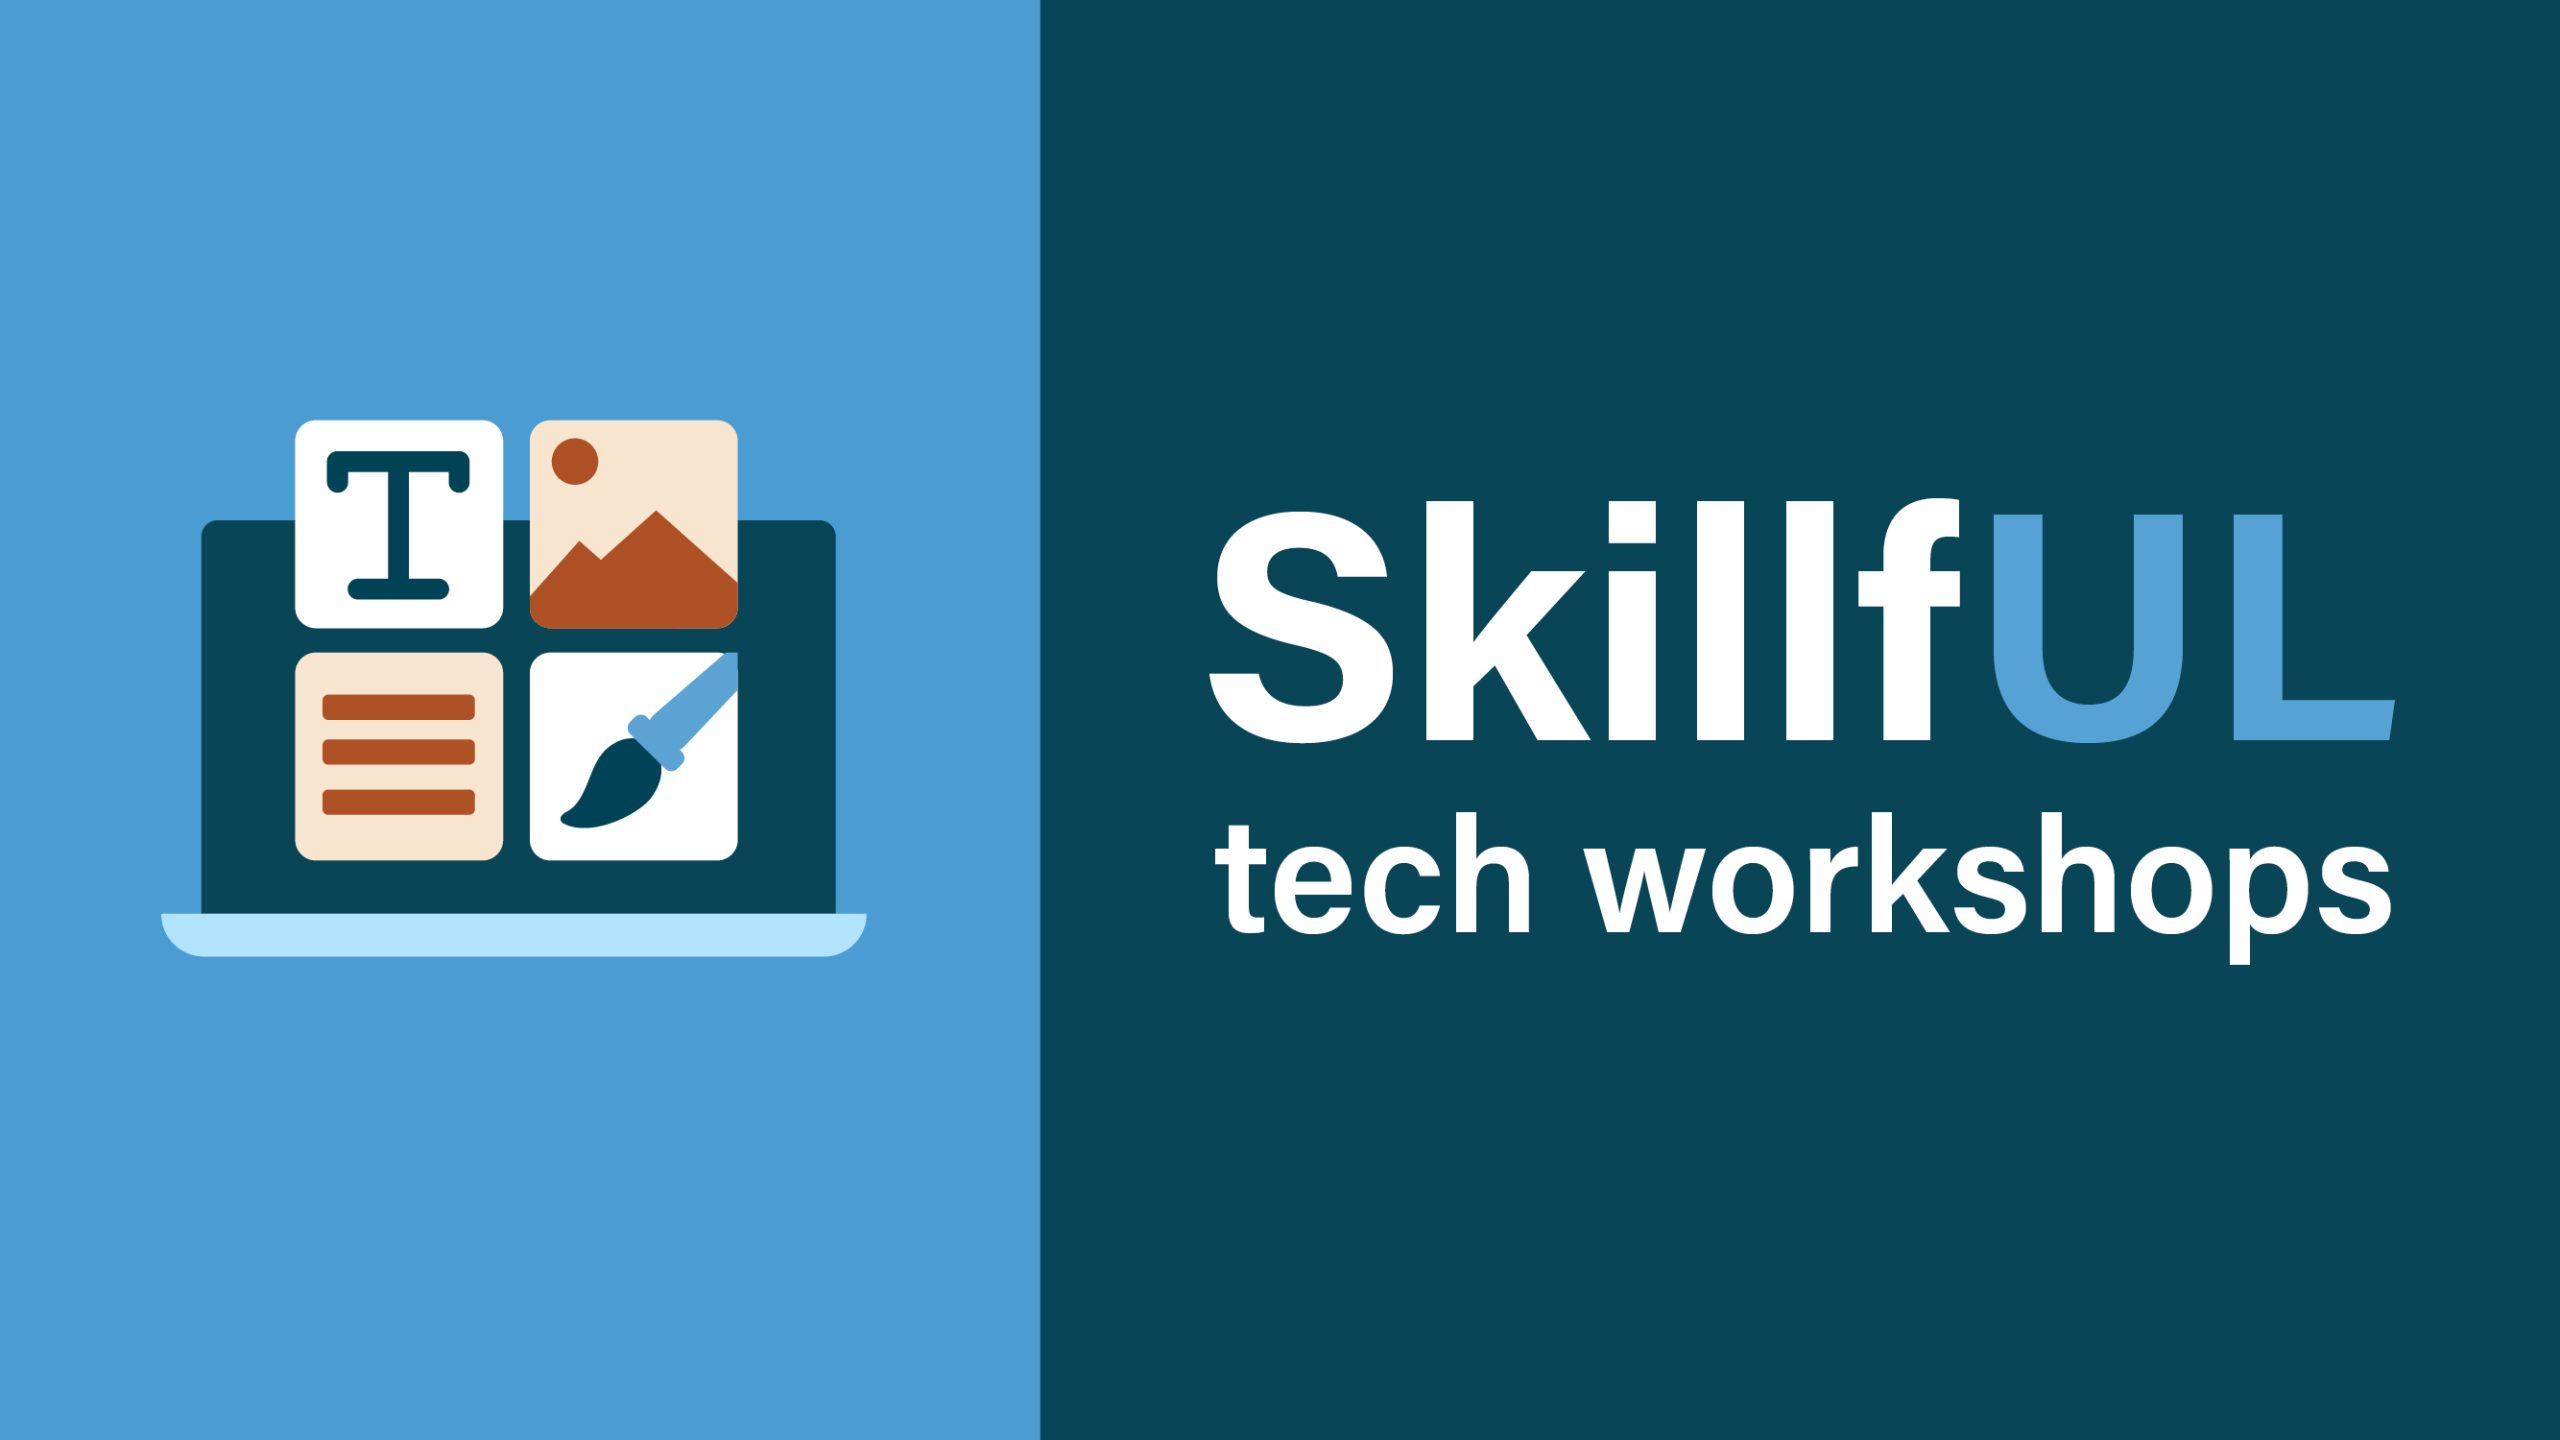 Learn new design skills in SkillfUL Tech workshops